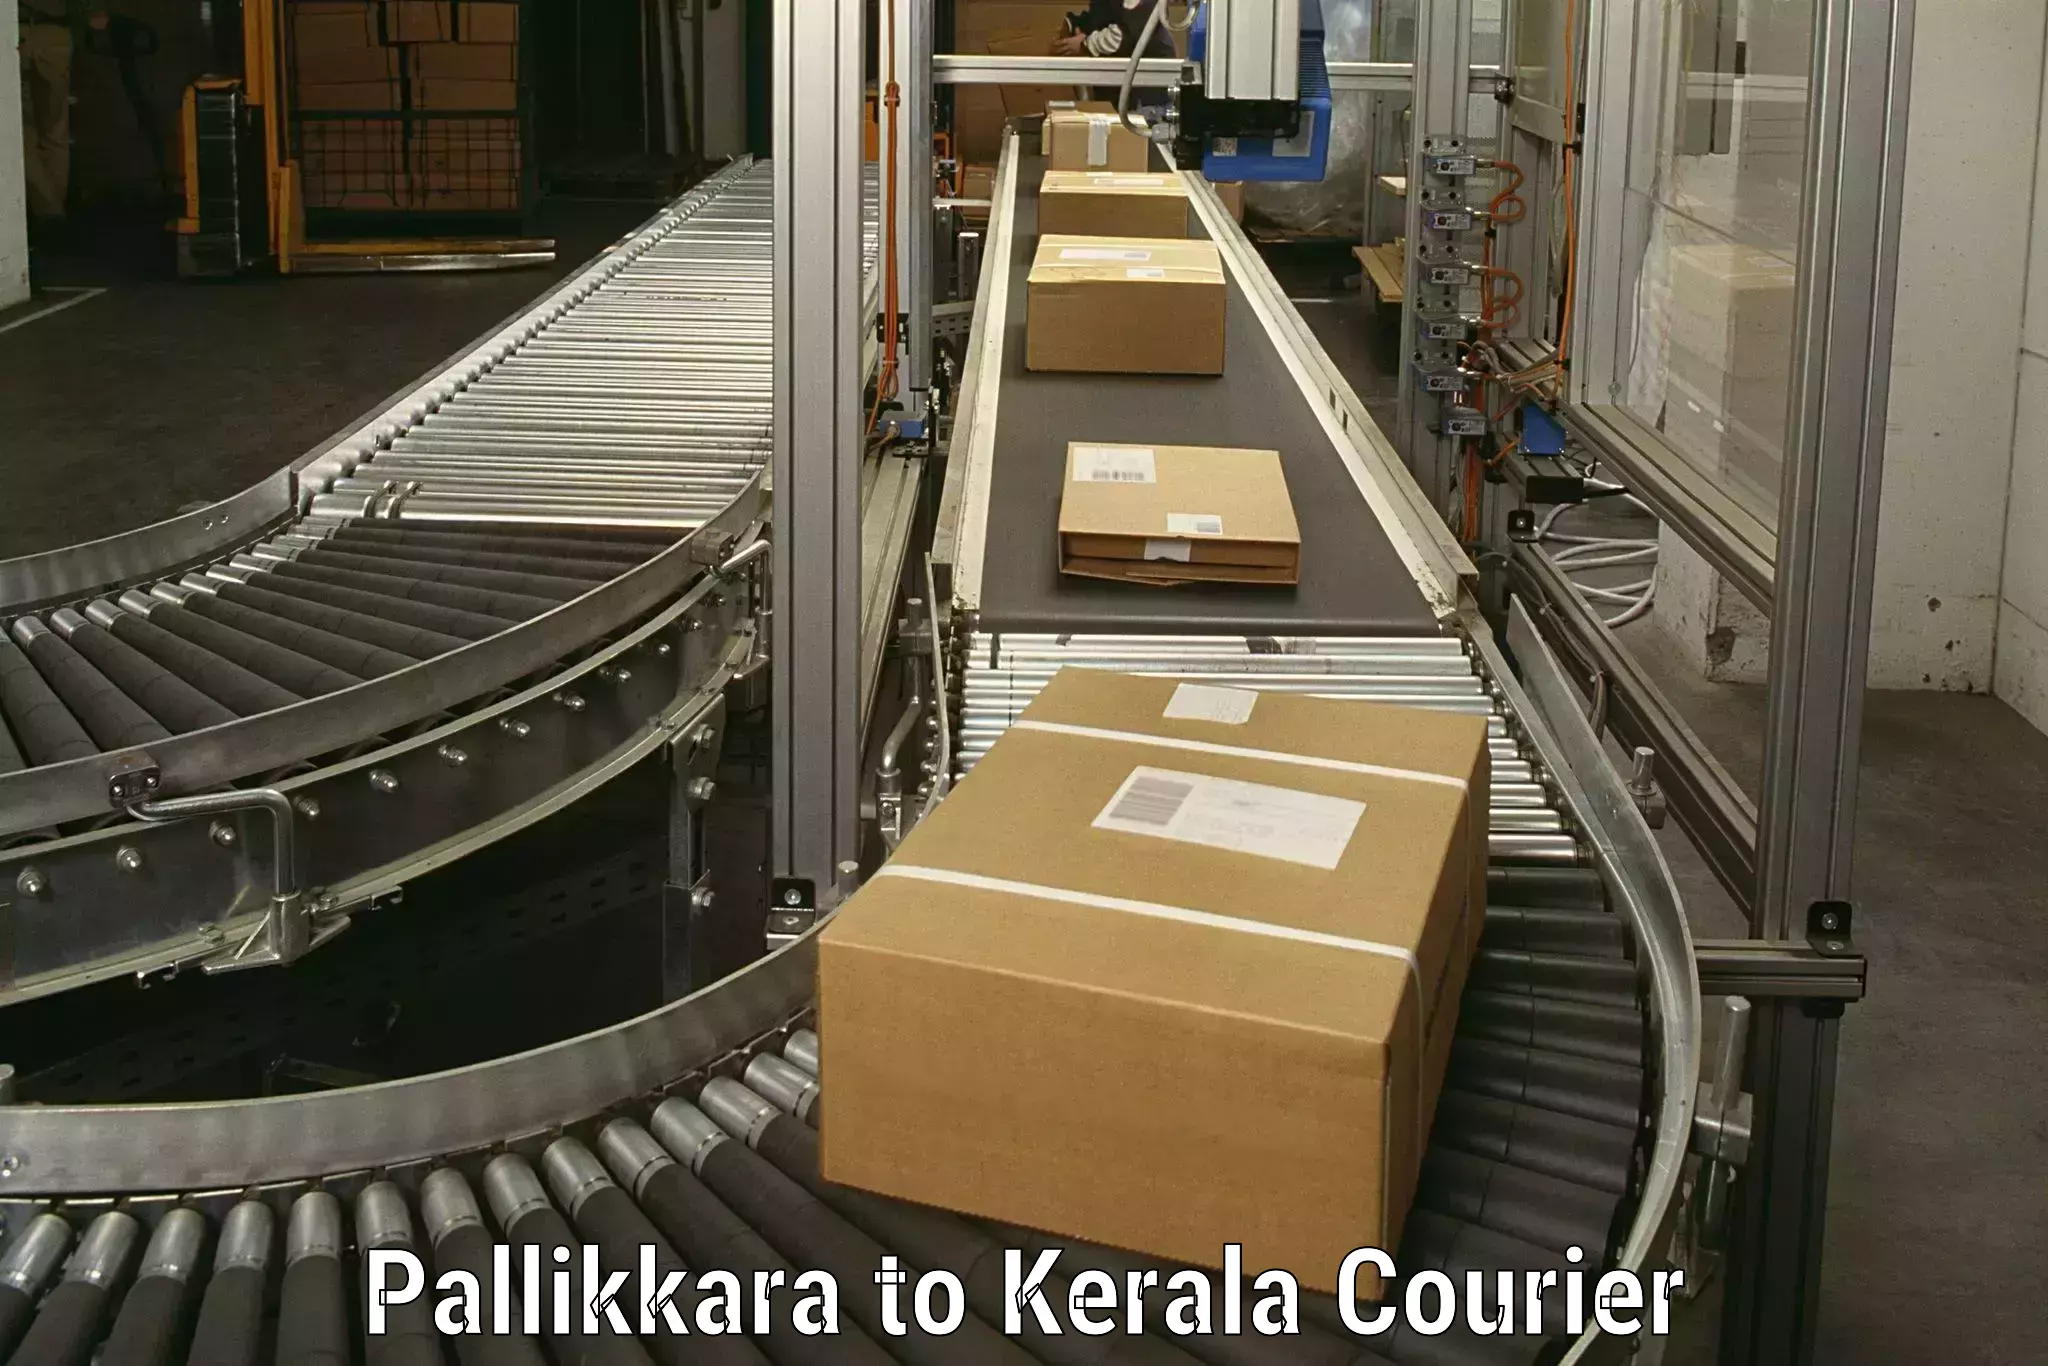 Moving and packing experts Pallikkara to Kerala